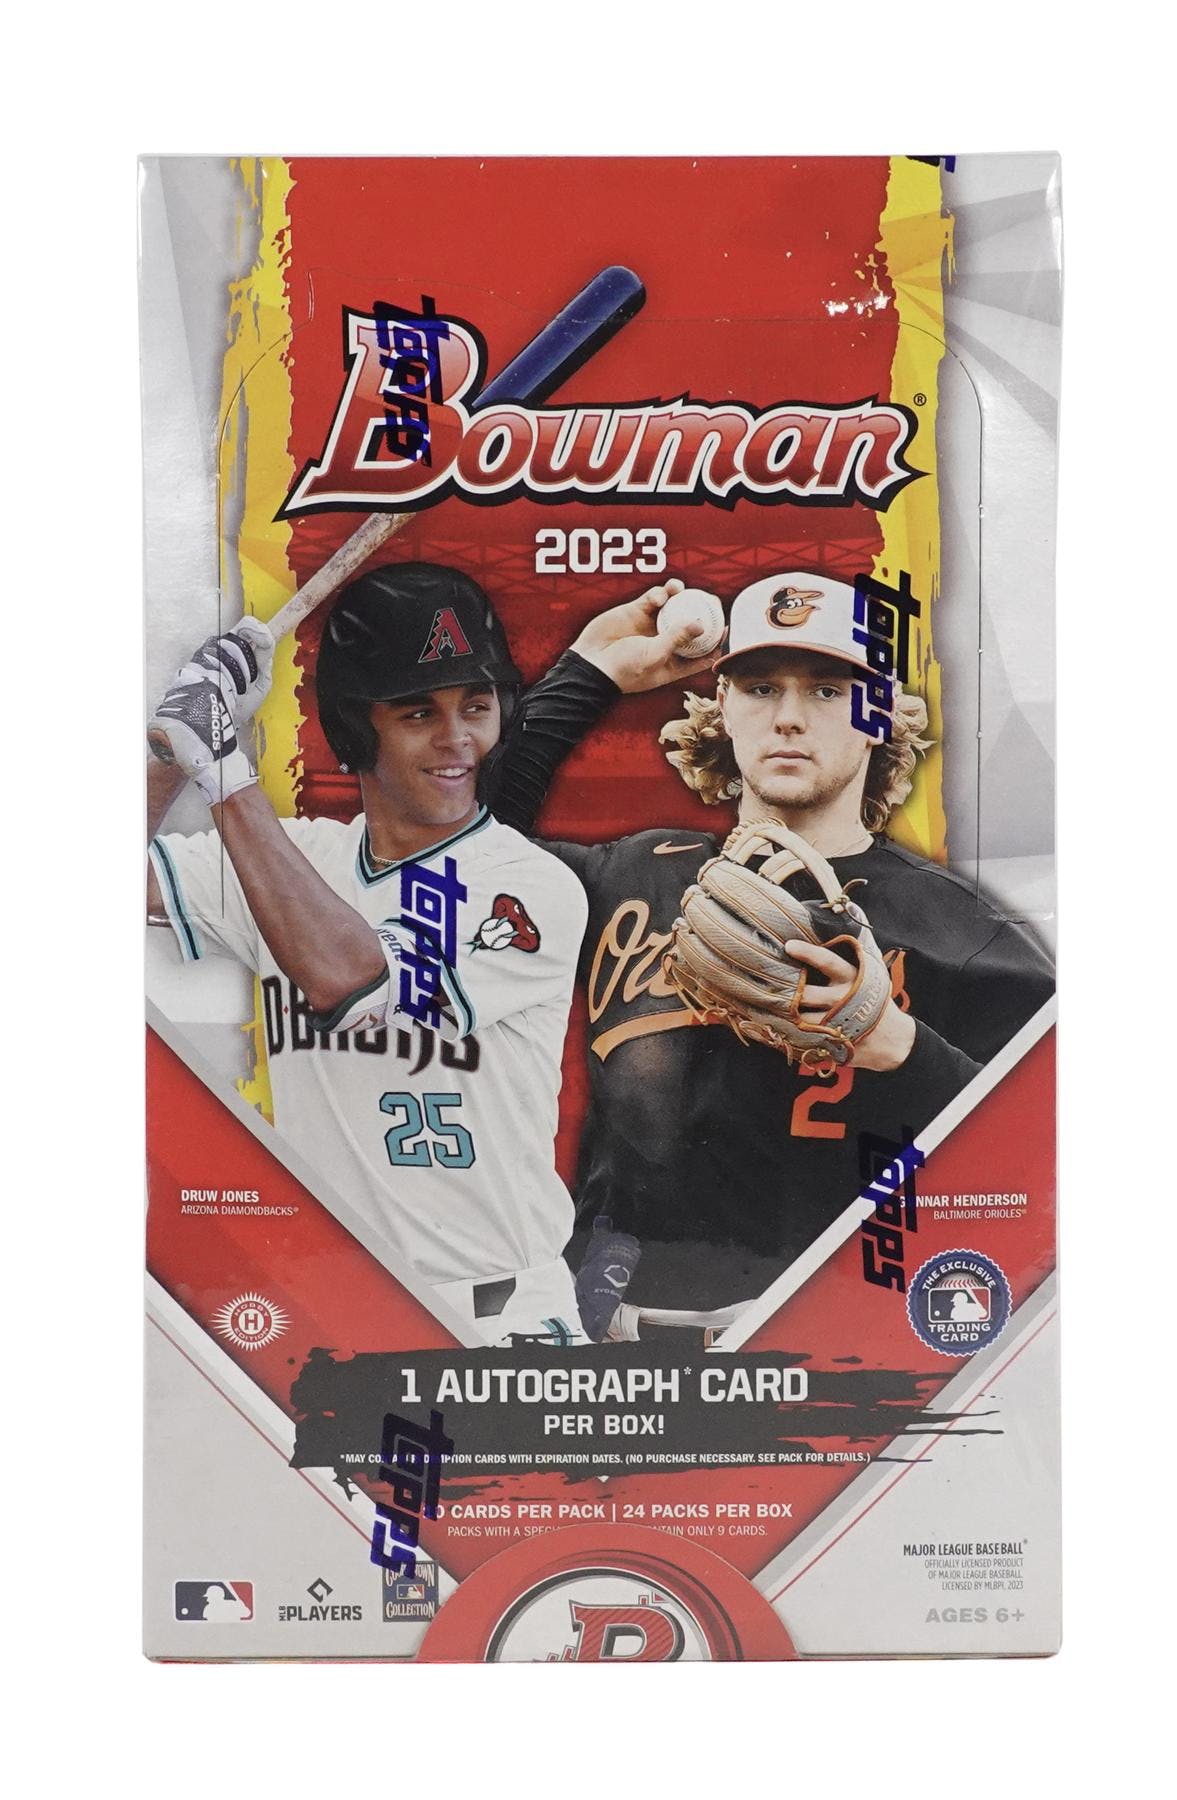  2023 Bowman Chrome Baseball HTA Choice Box 3 Autograph